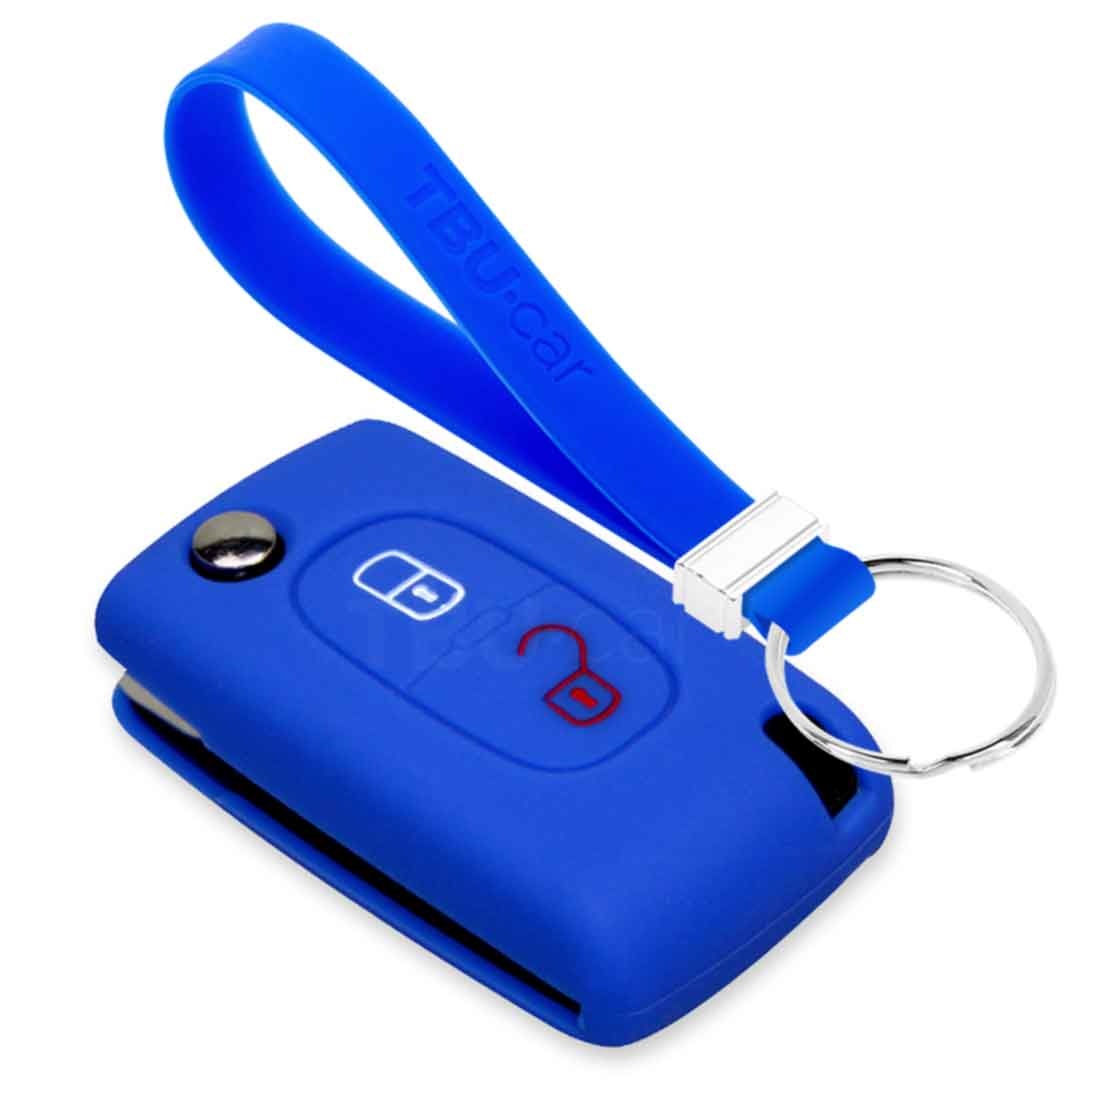 TBU car TBU car Autoschlüssel Hülle kompatibel mit Citroën 2 Tasten - Schutzhülle aus Silikon - Auto Schlüsselhülle Cover in Blau